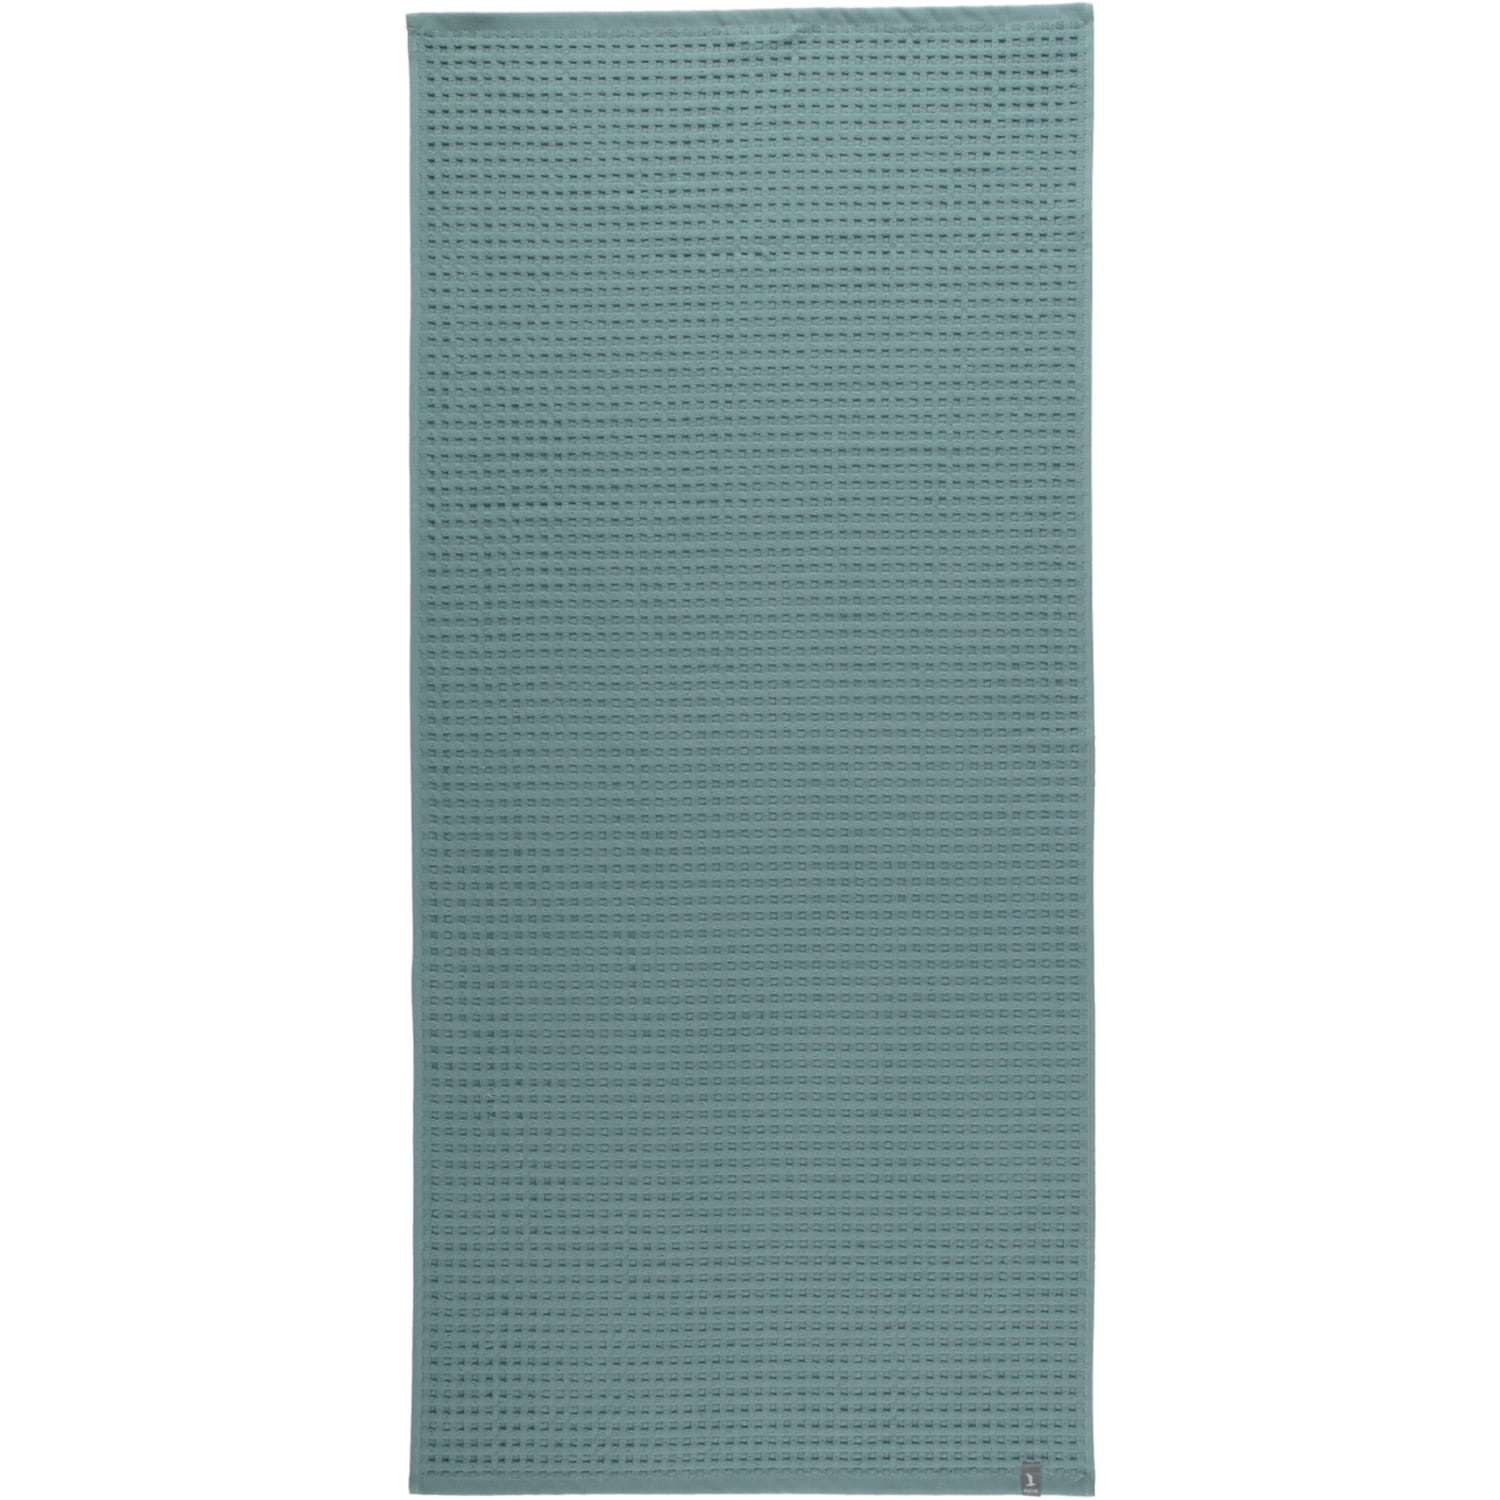 Möve - Waffelpiquée - Farbe: arctic - 530 (1-0605/8762) - Handtuch 50x100  cm | Möve Handtücher | Möve | Marken